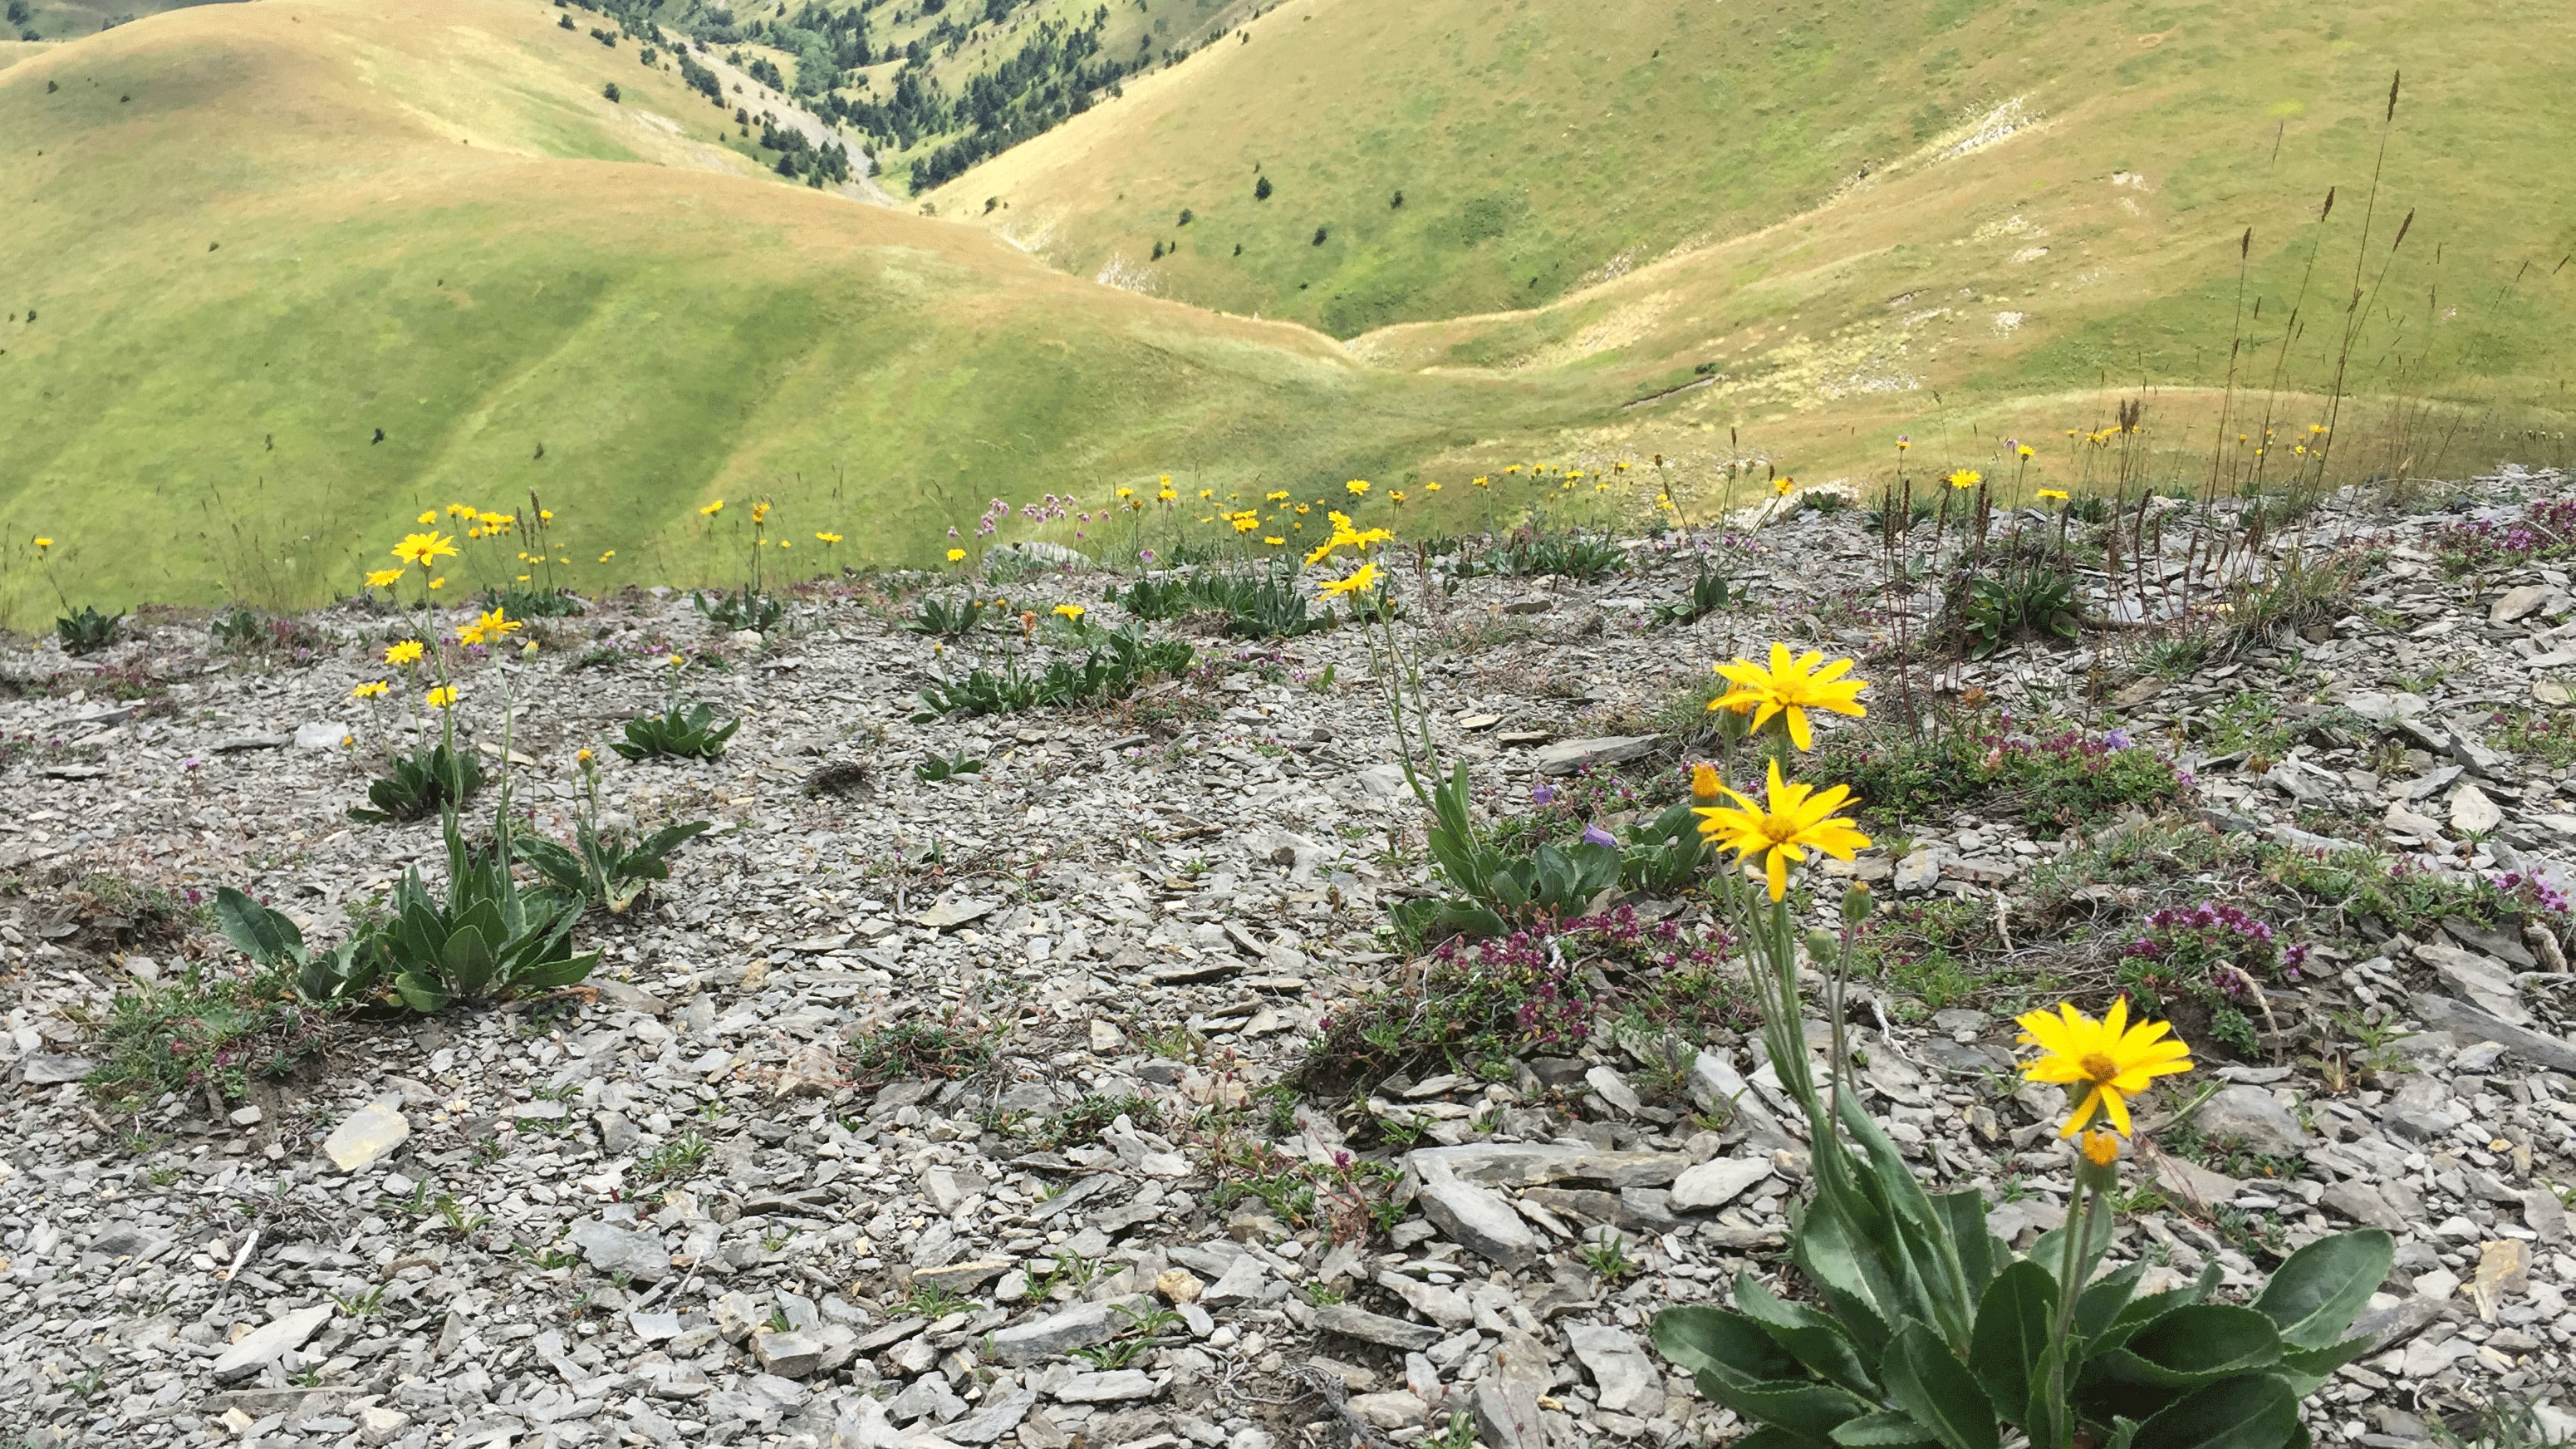 Flowering plants on a rocky alpine slope.